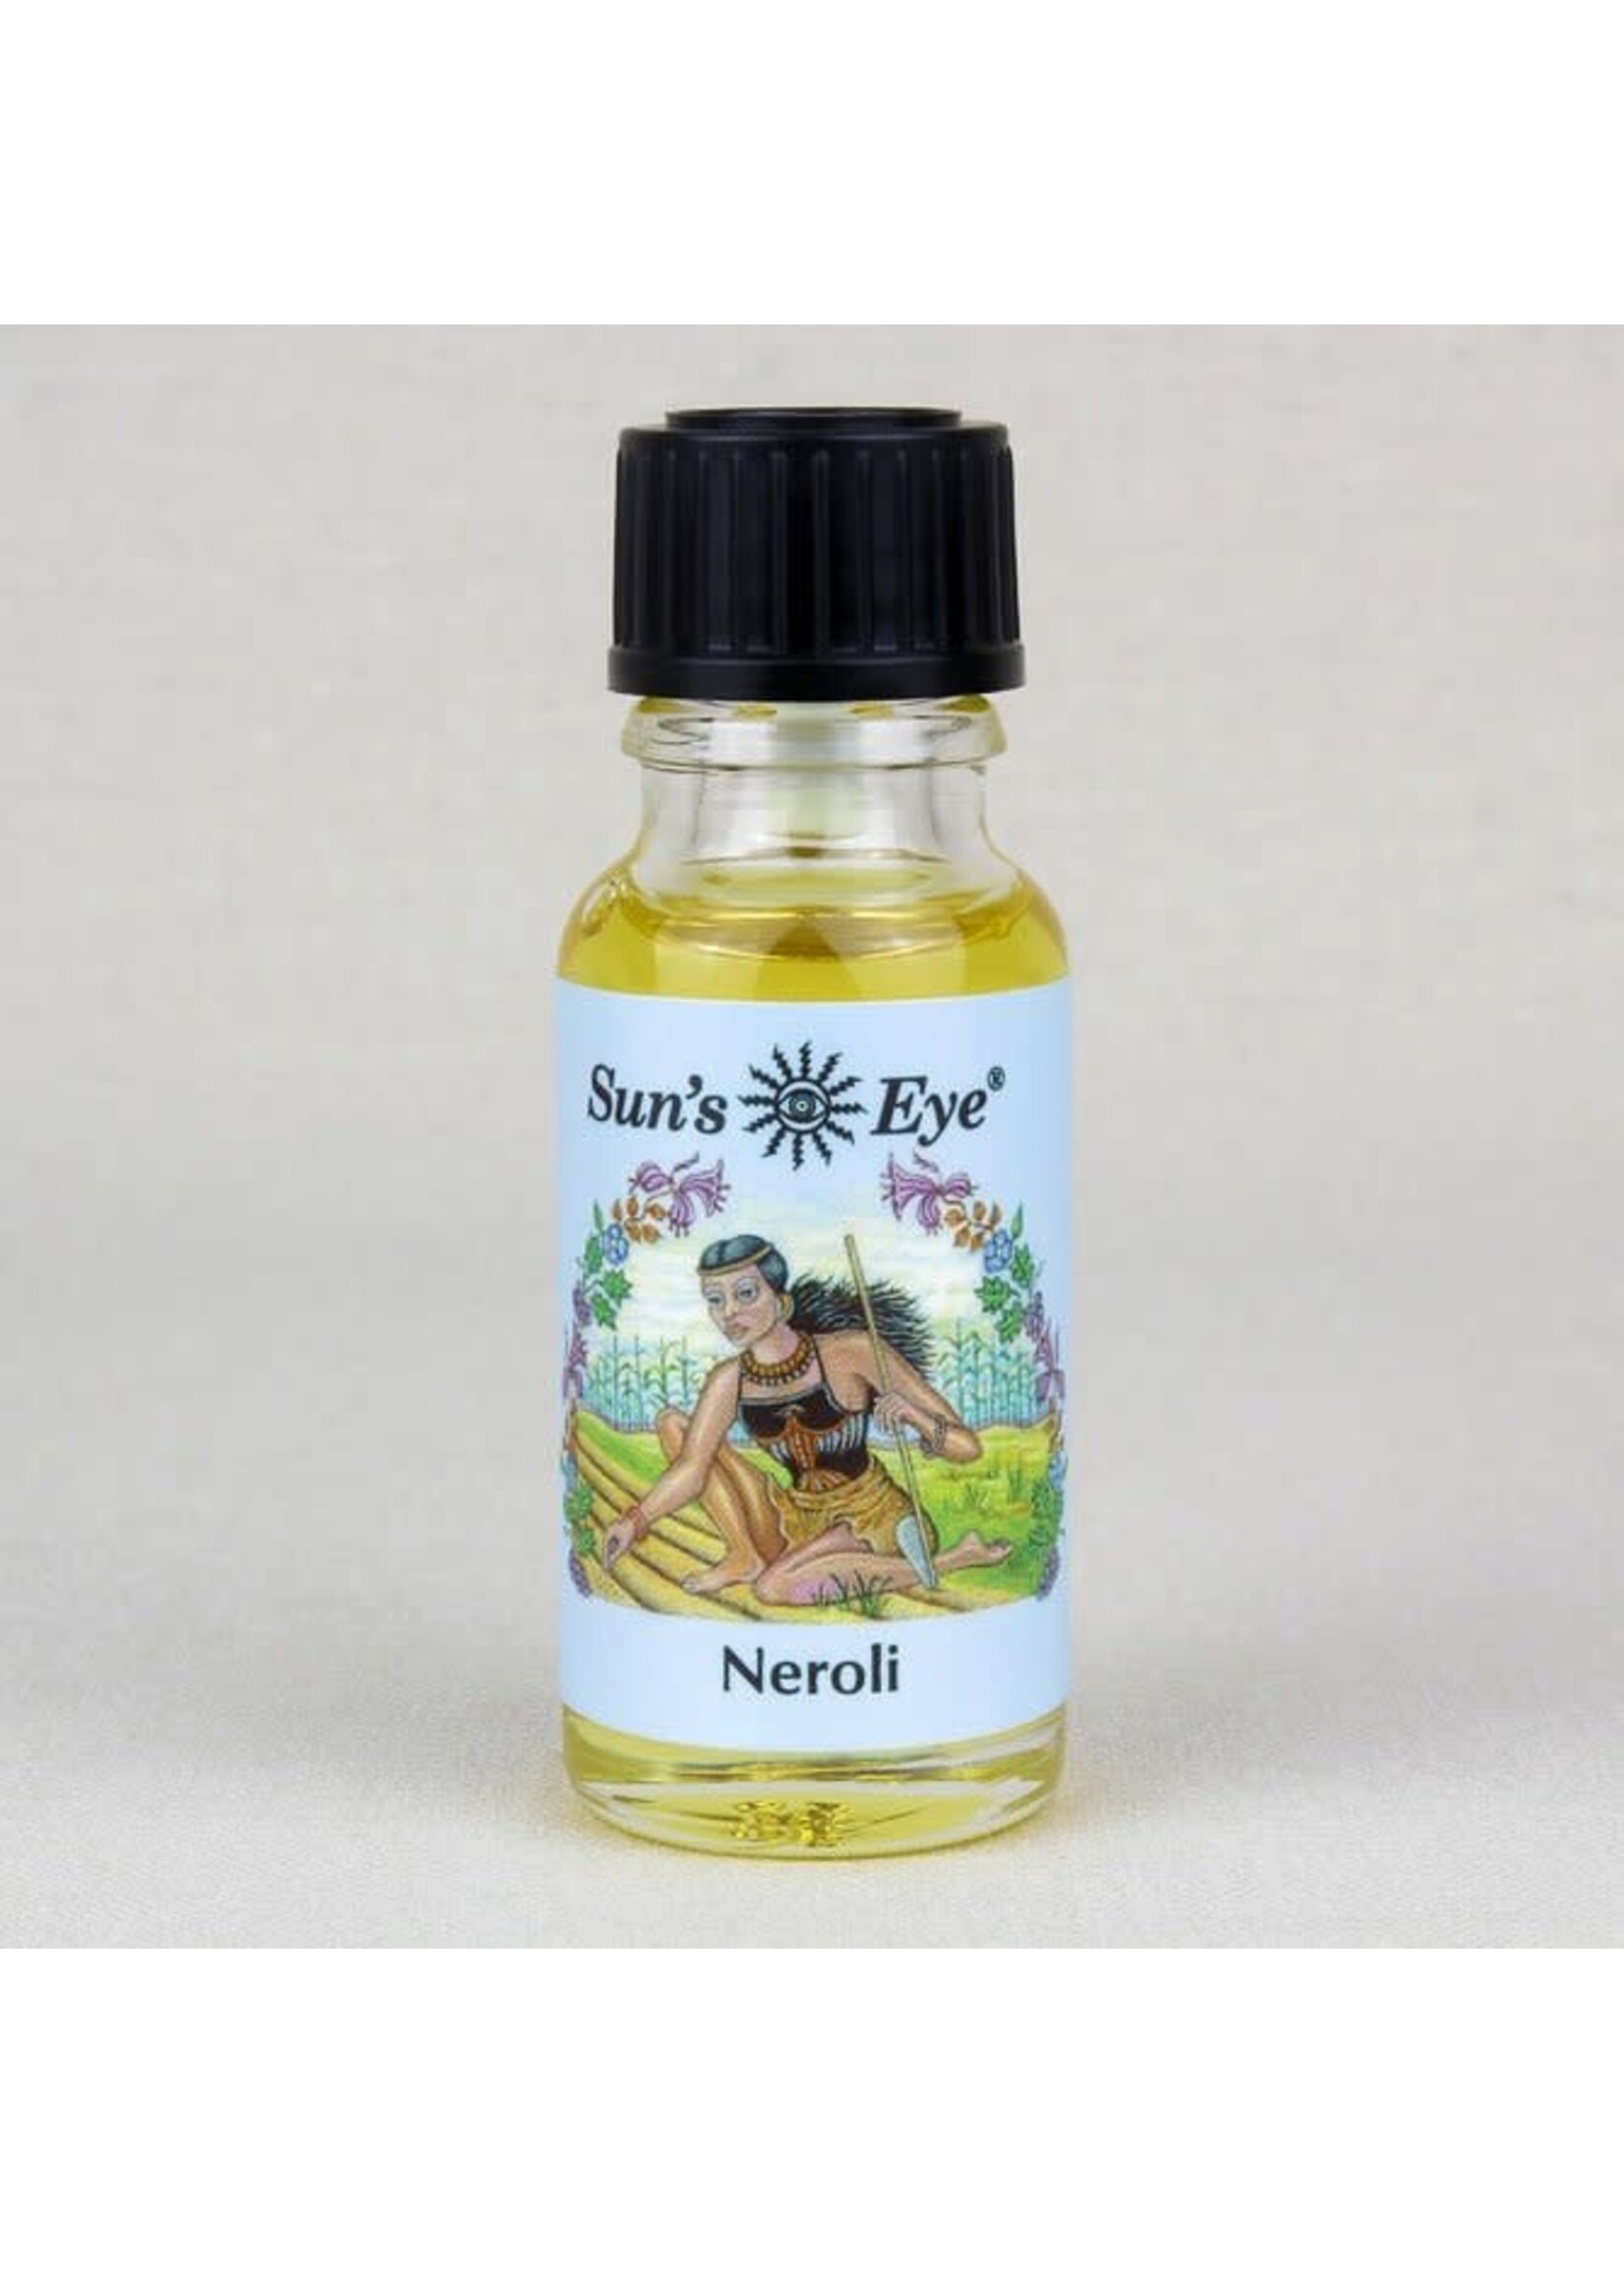 Sun's Eye Fruit + Floral Oils - .5oz Bottle